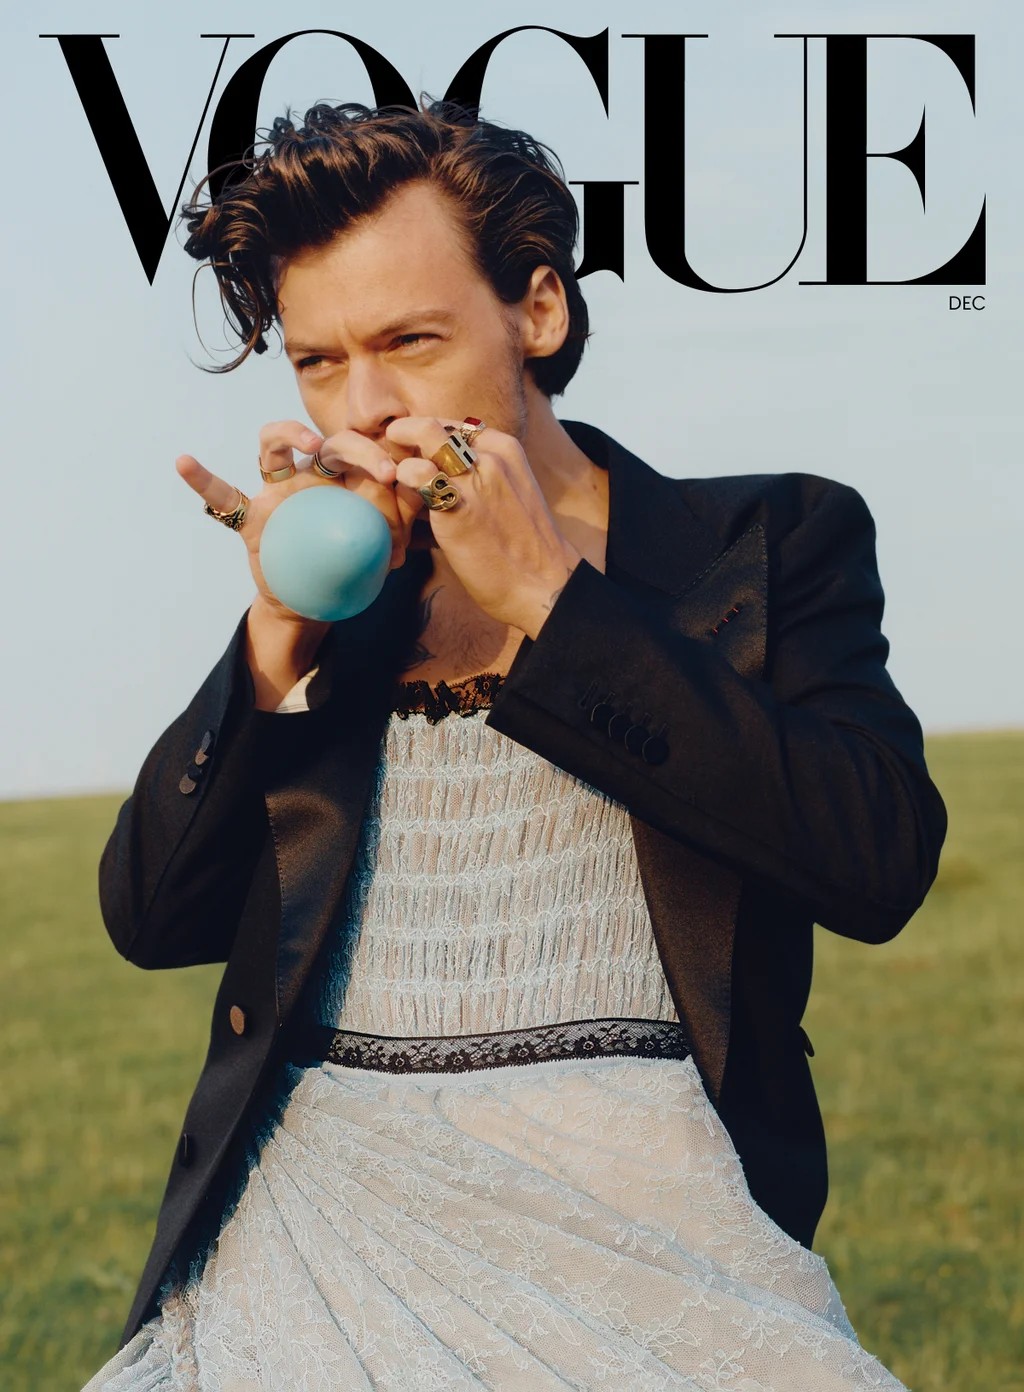 Harry Styles na capa da Vogue - Edição Dezembro 2020 (Foto: Tyler Mitchell)